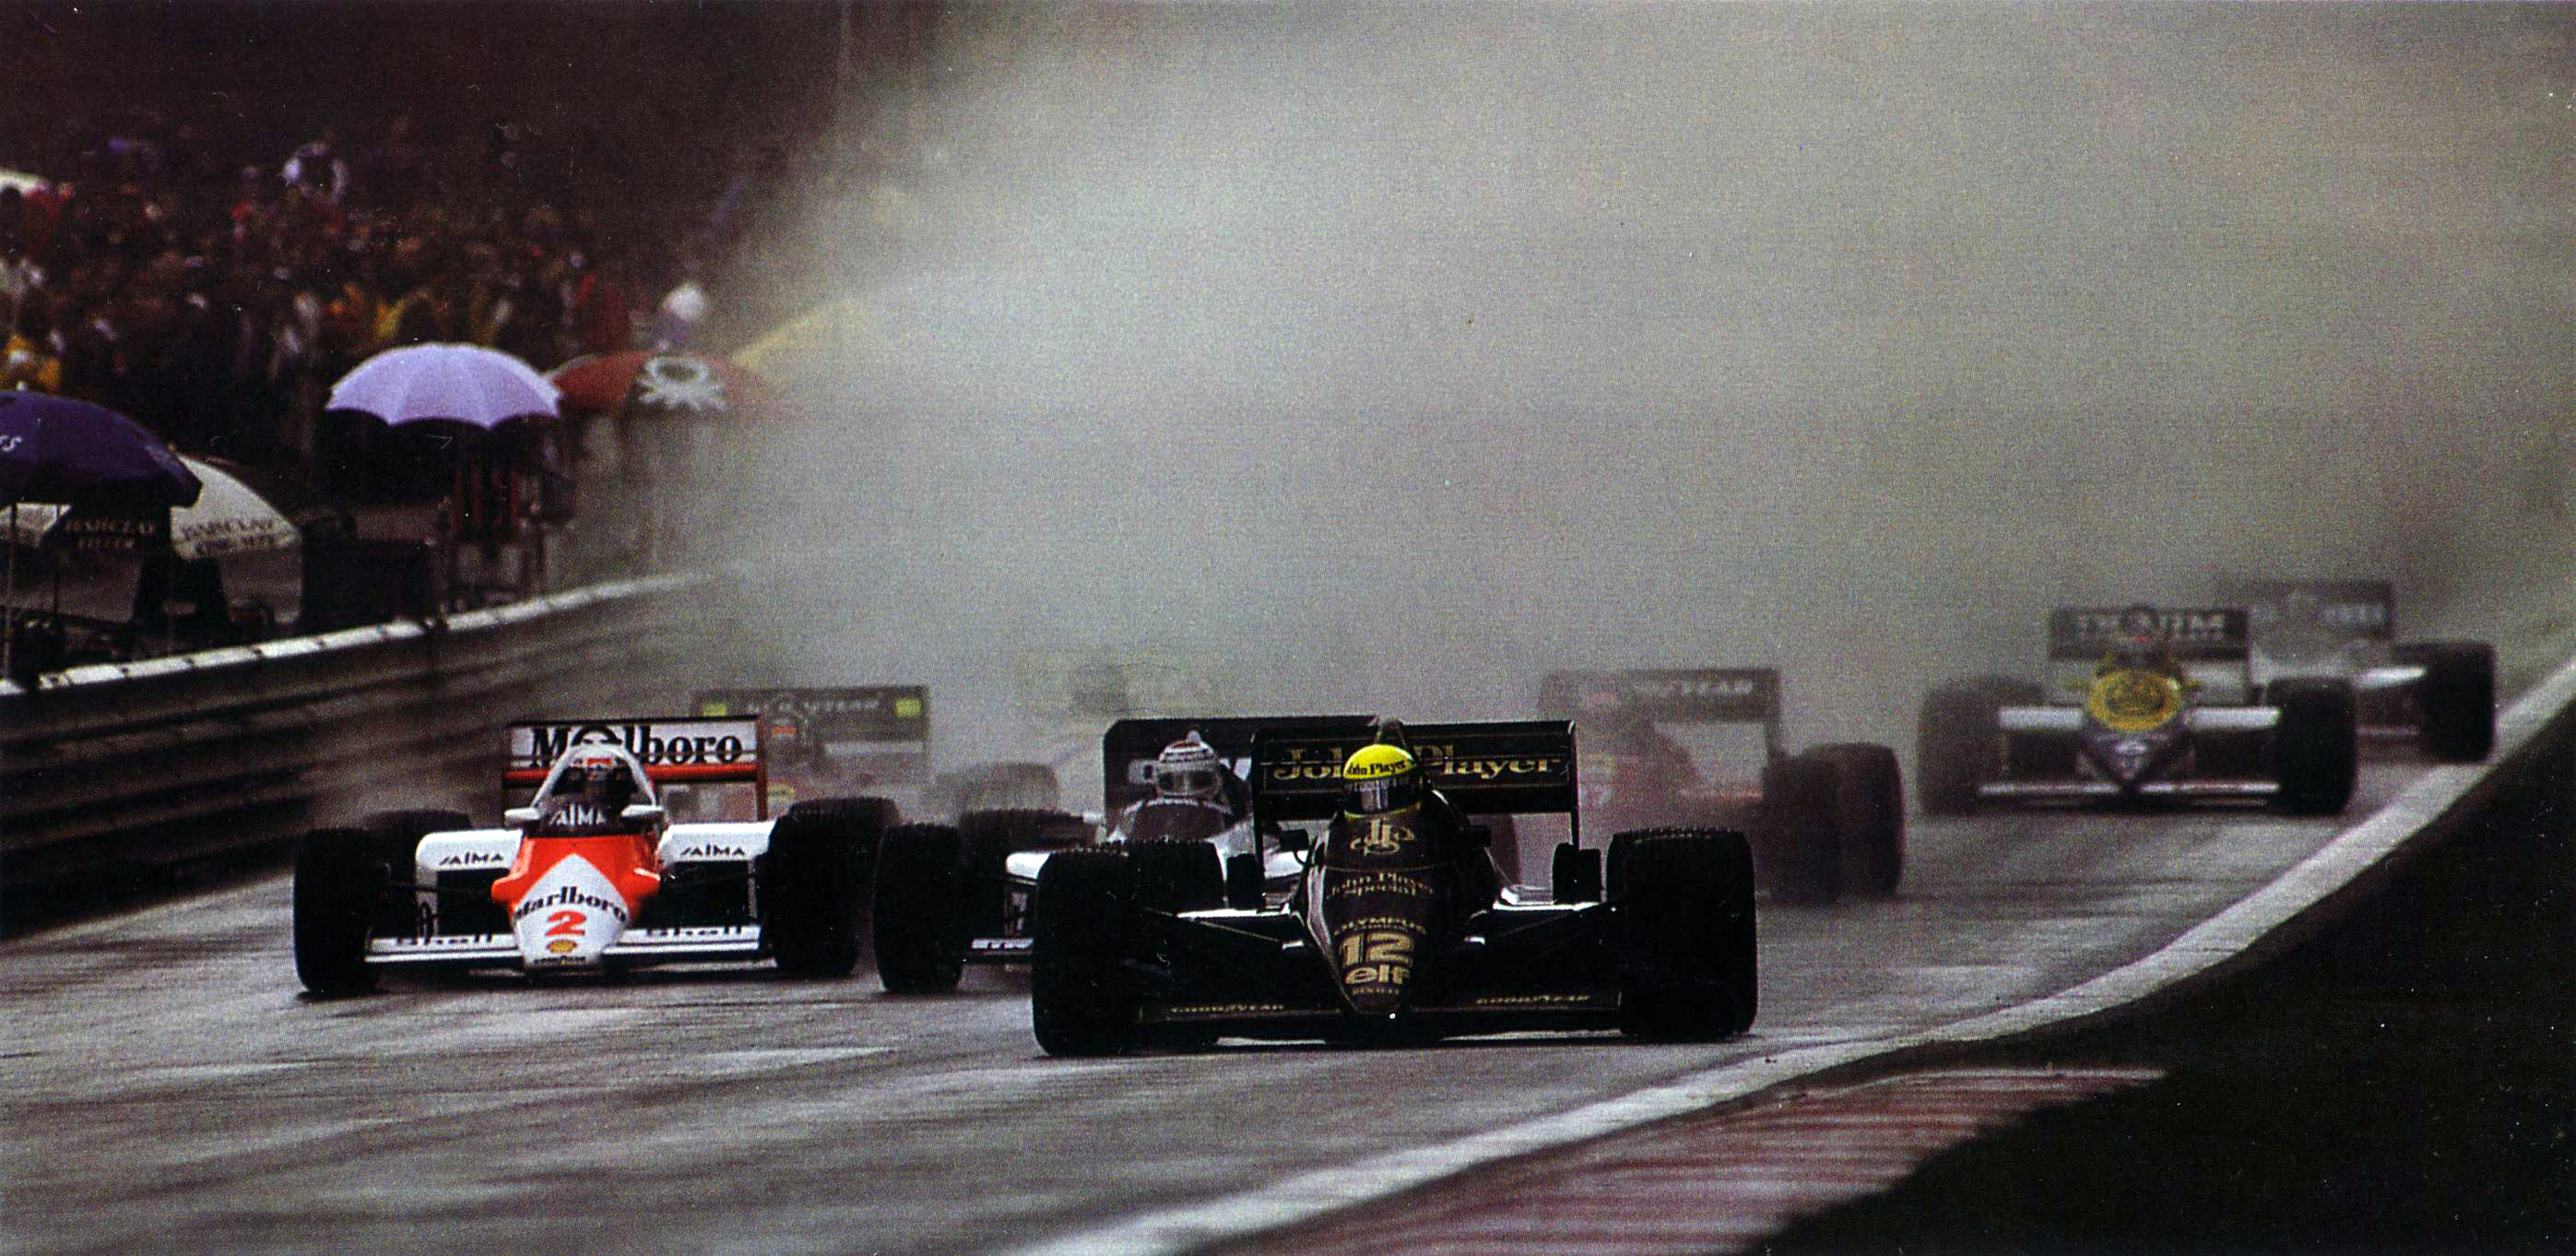 The start of a Grand Prix in 1985.